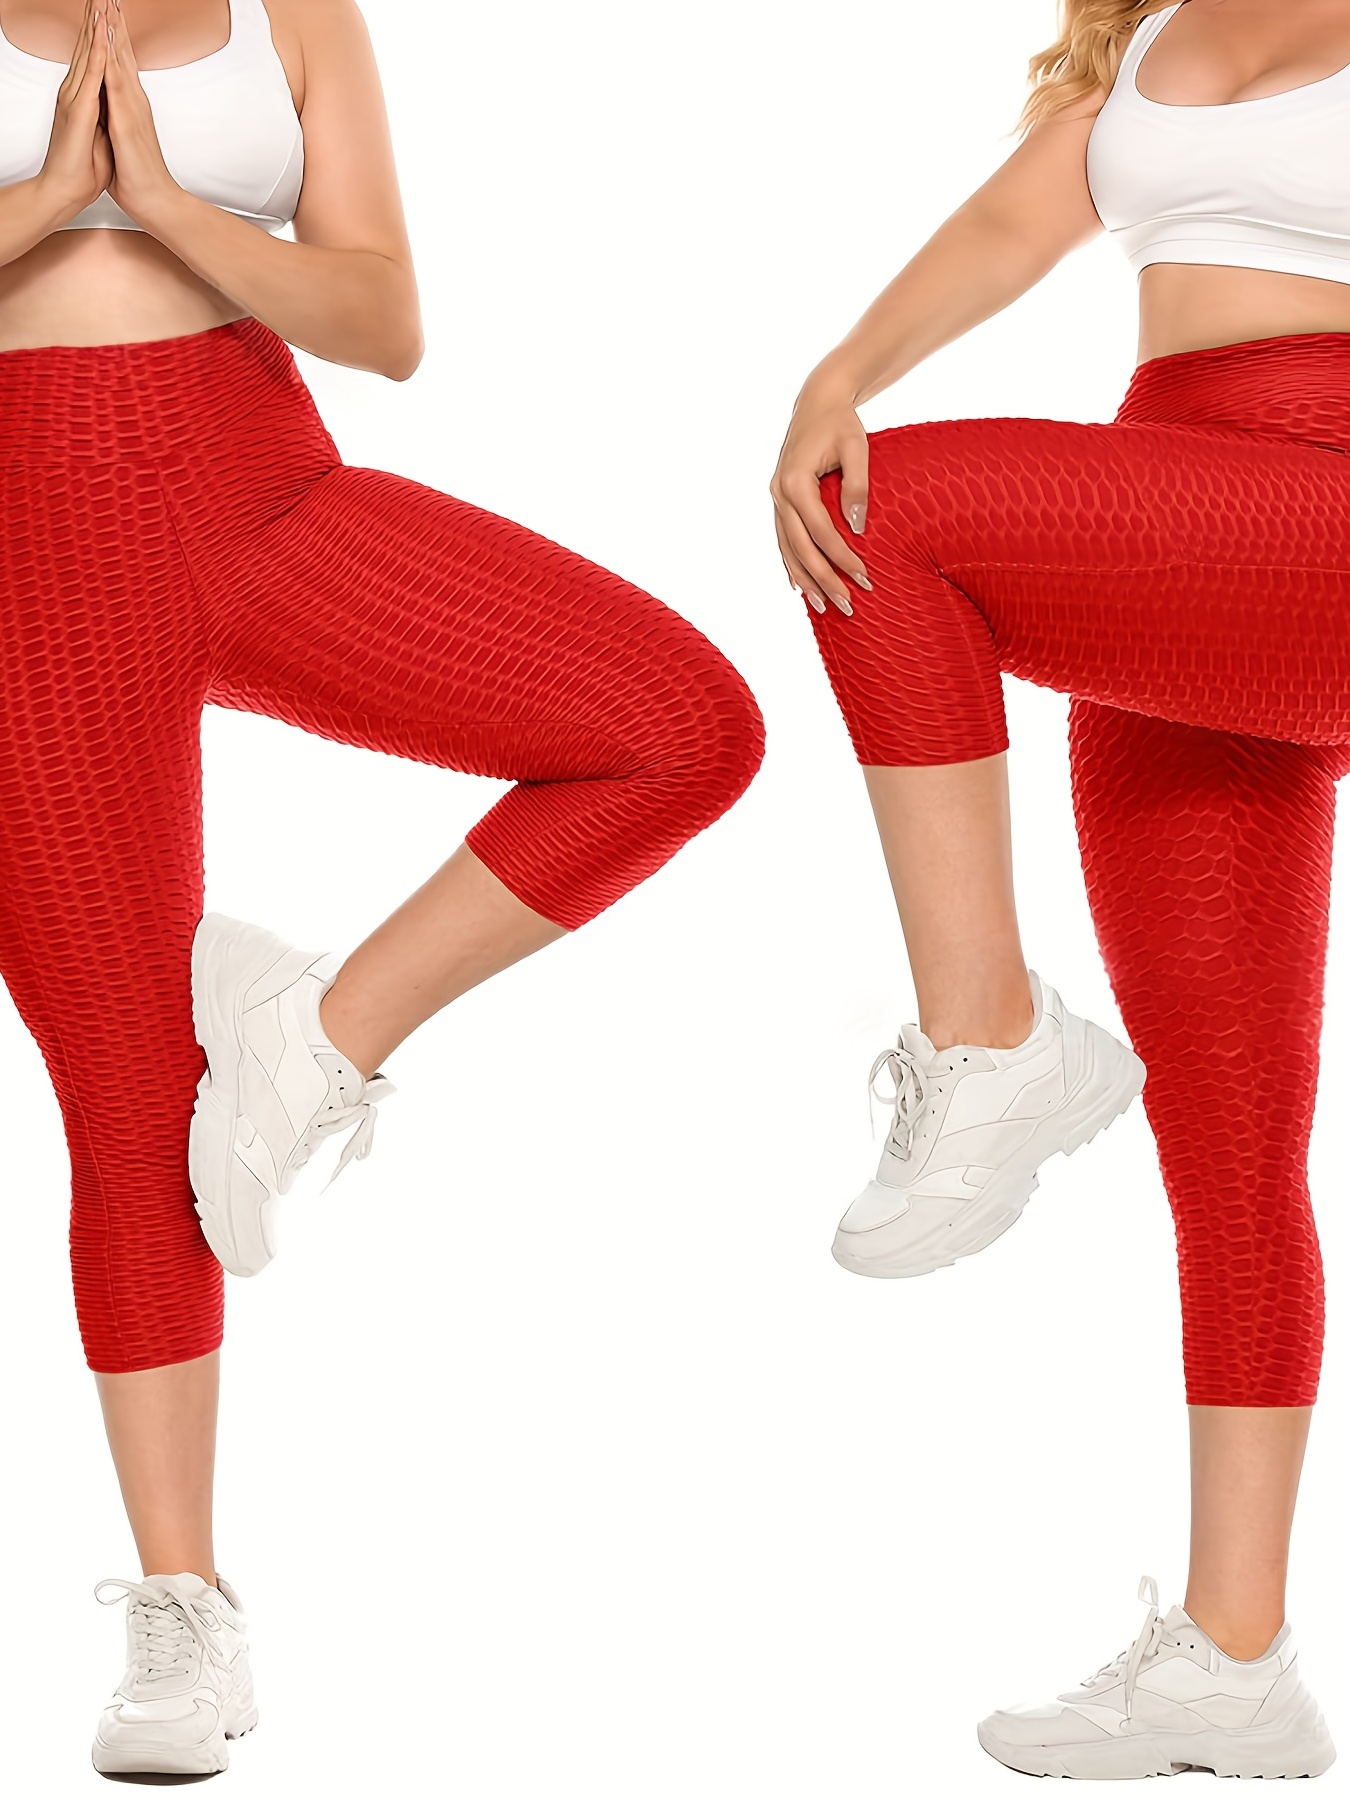 Leggings Women's High Waist Yoga Pants Tummy Control Scrunched